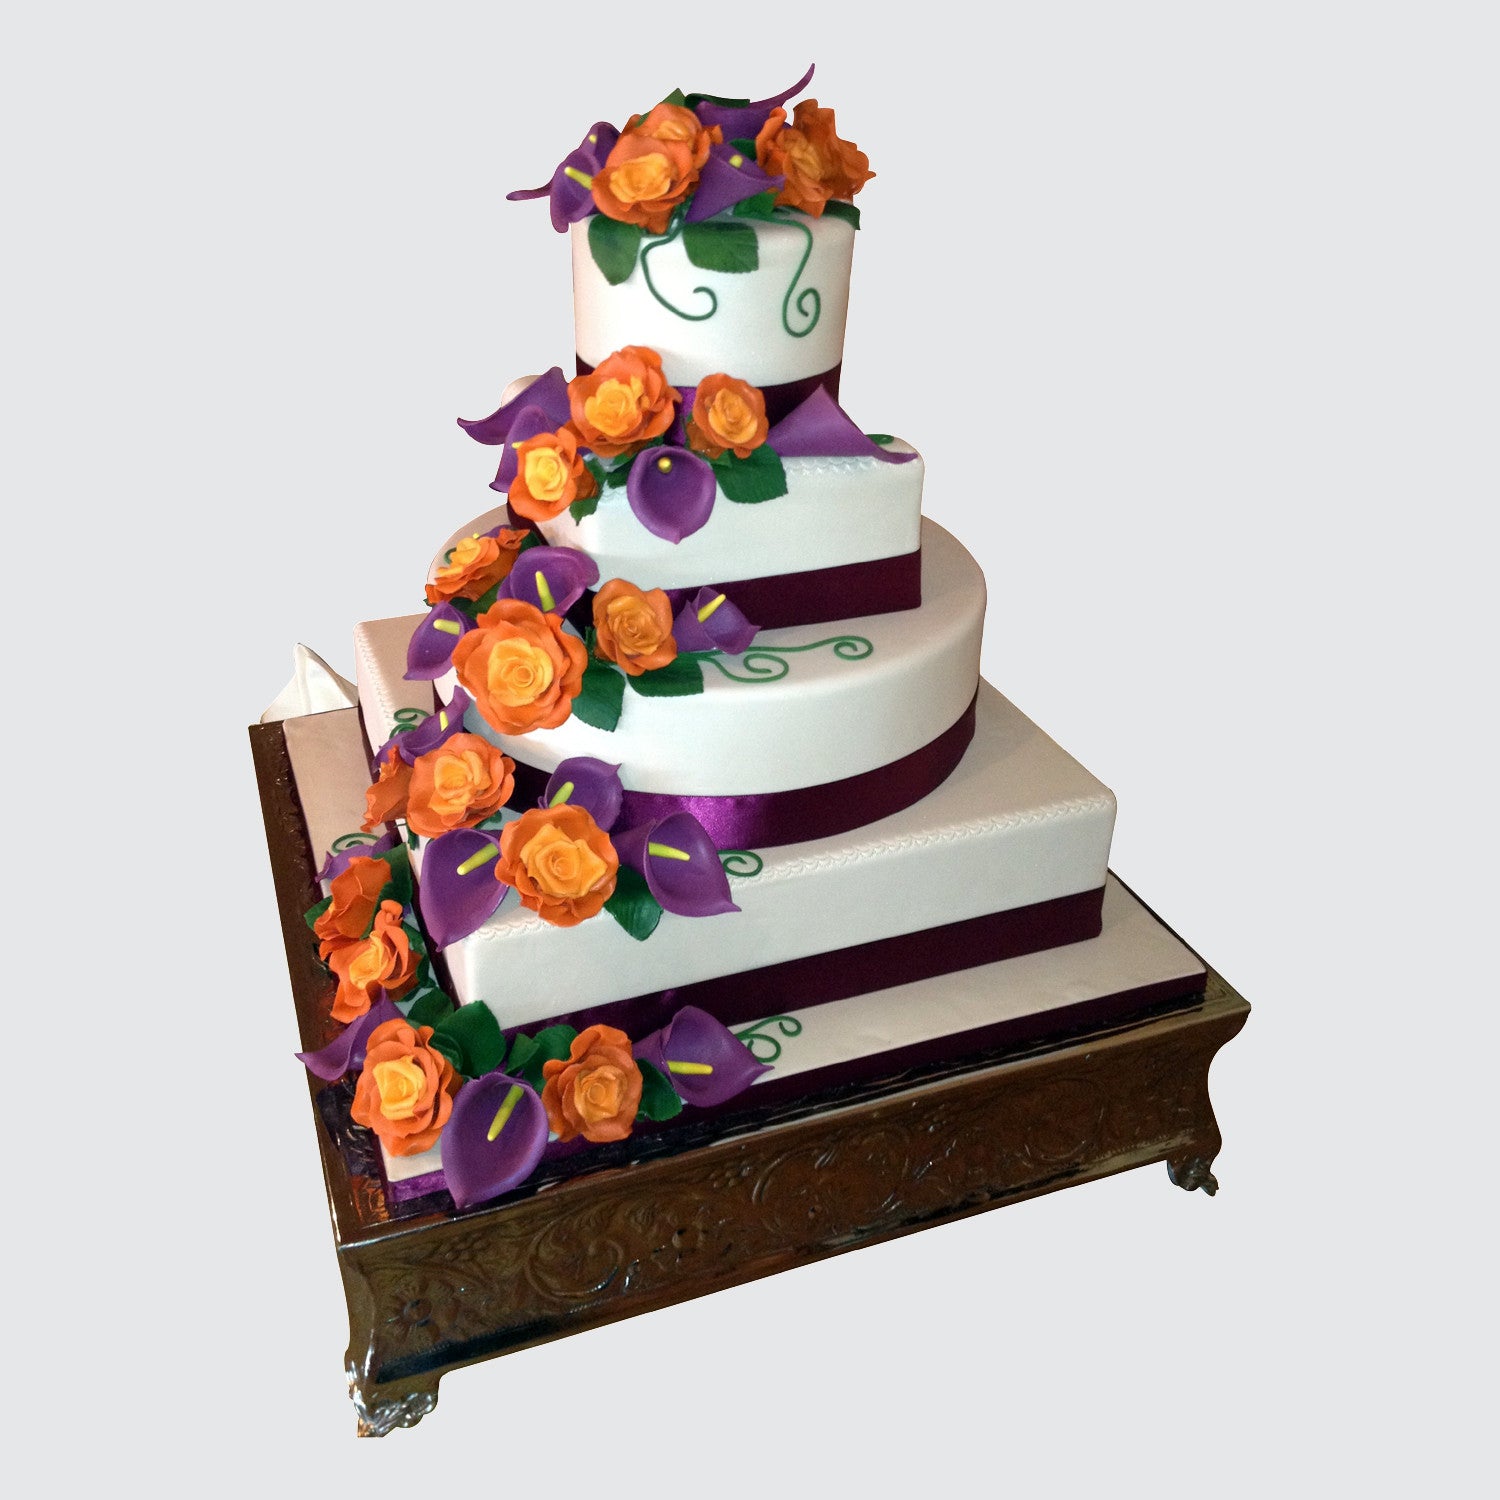  GiftBay Wedding Cake Stand  Square 20 Silver